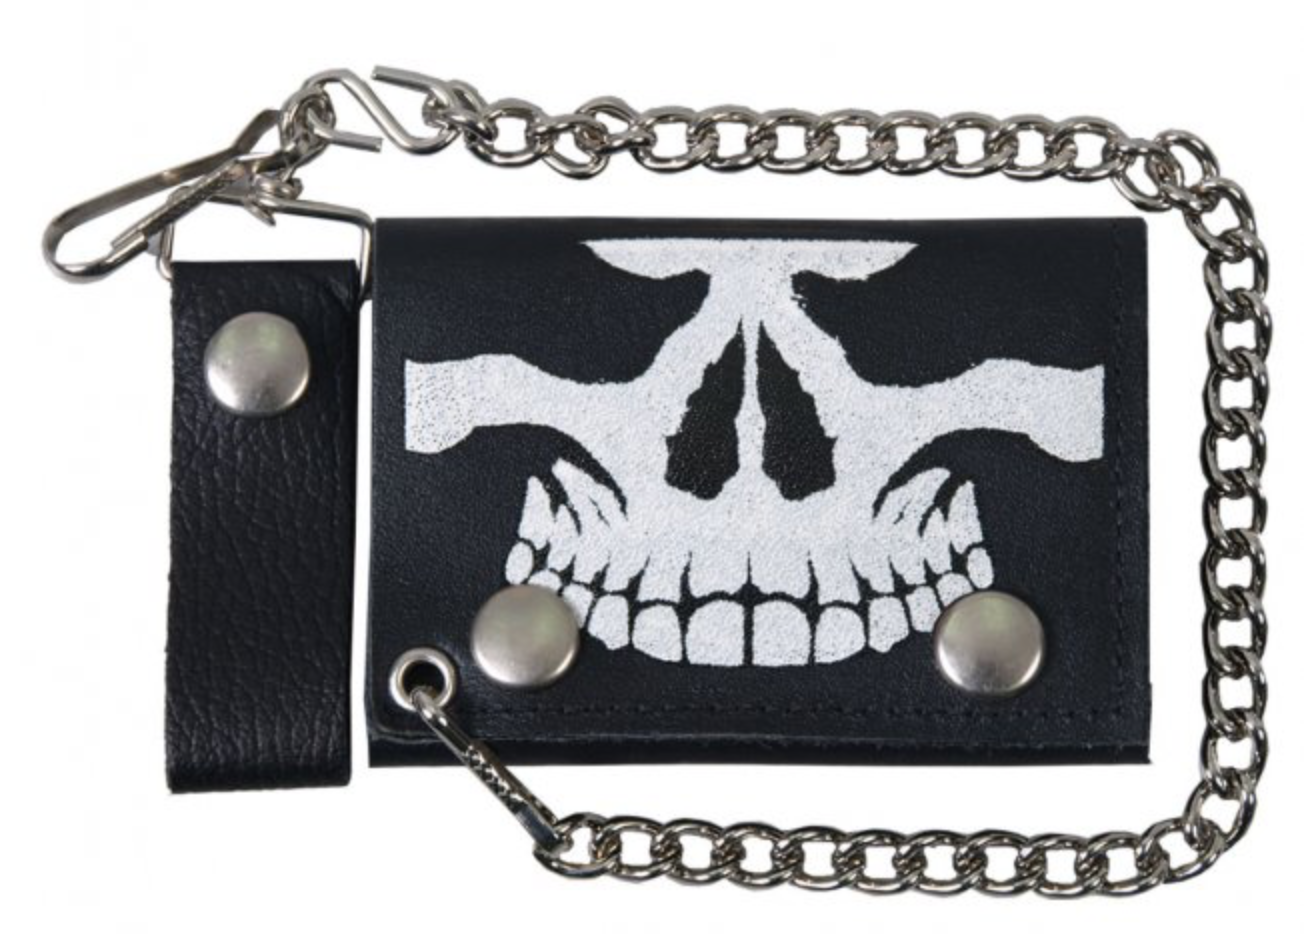 Skull Leather Wallet - 4"